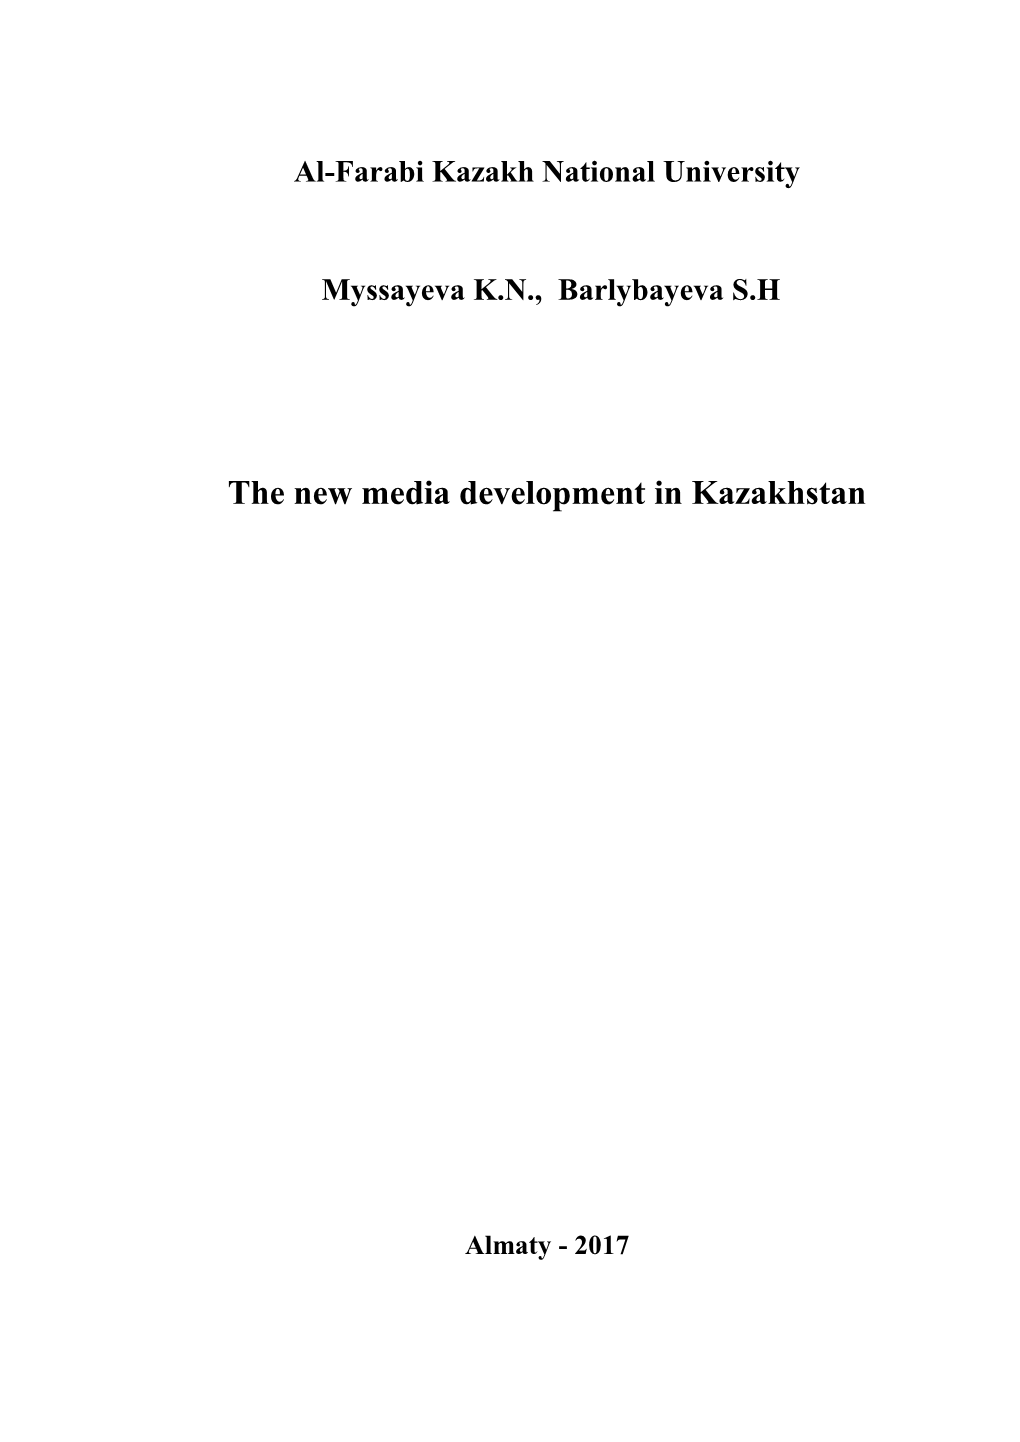 The New Media Development in Kazakhstan